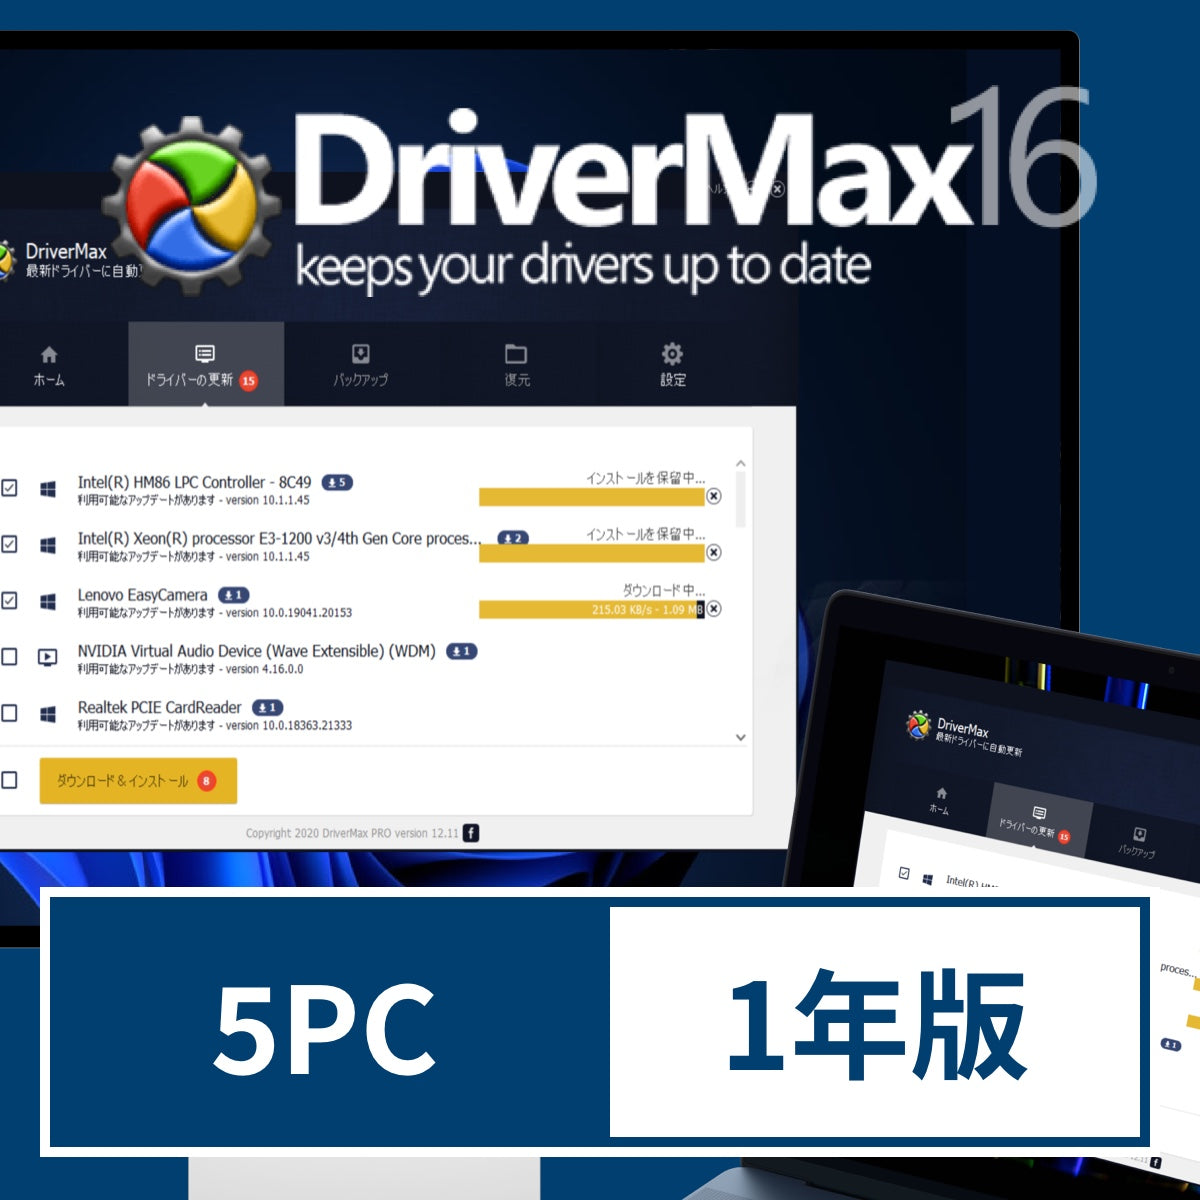 DriverMax 16 5PC 1年